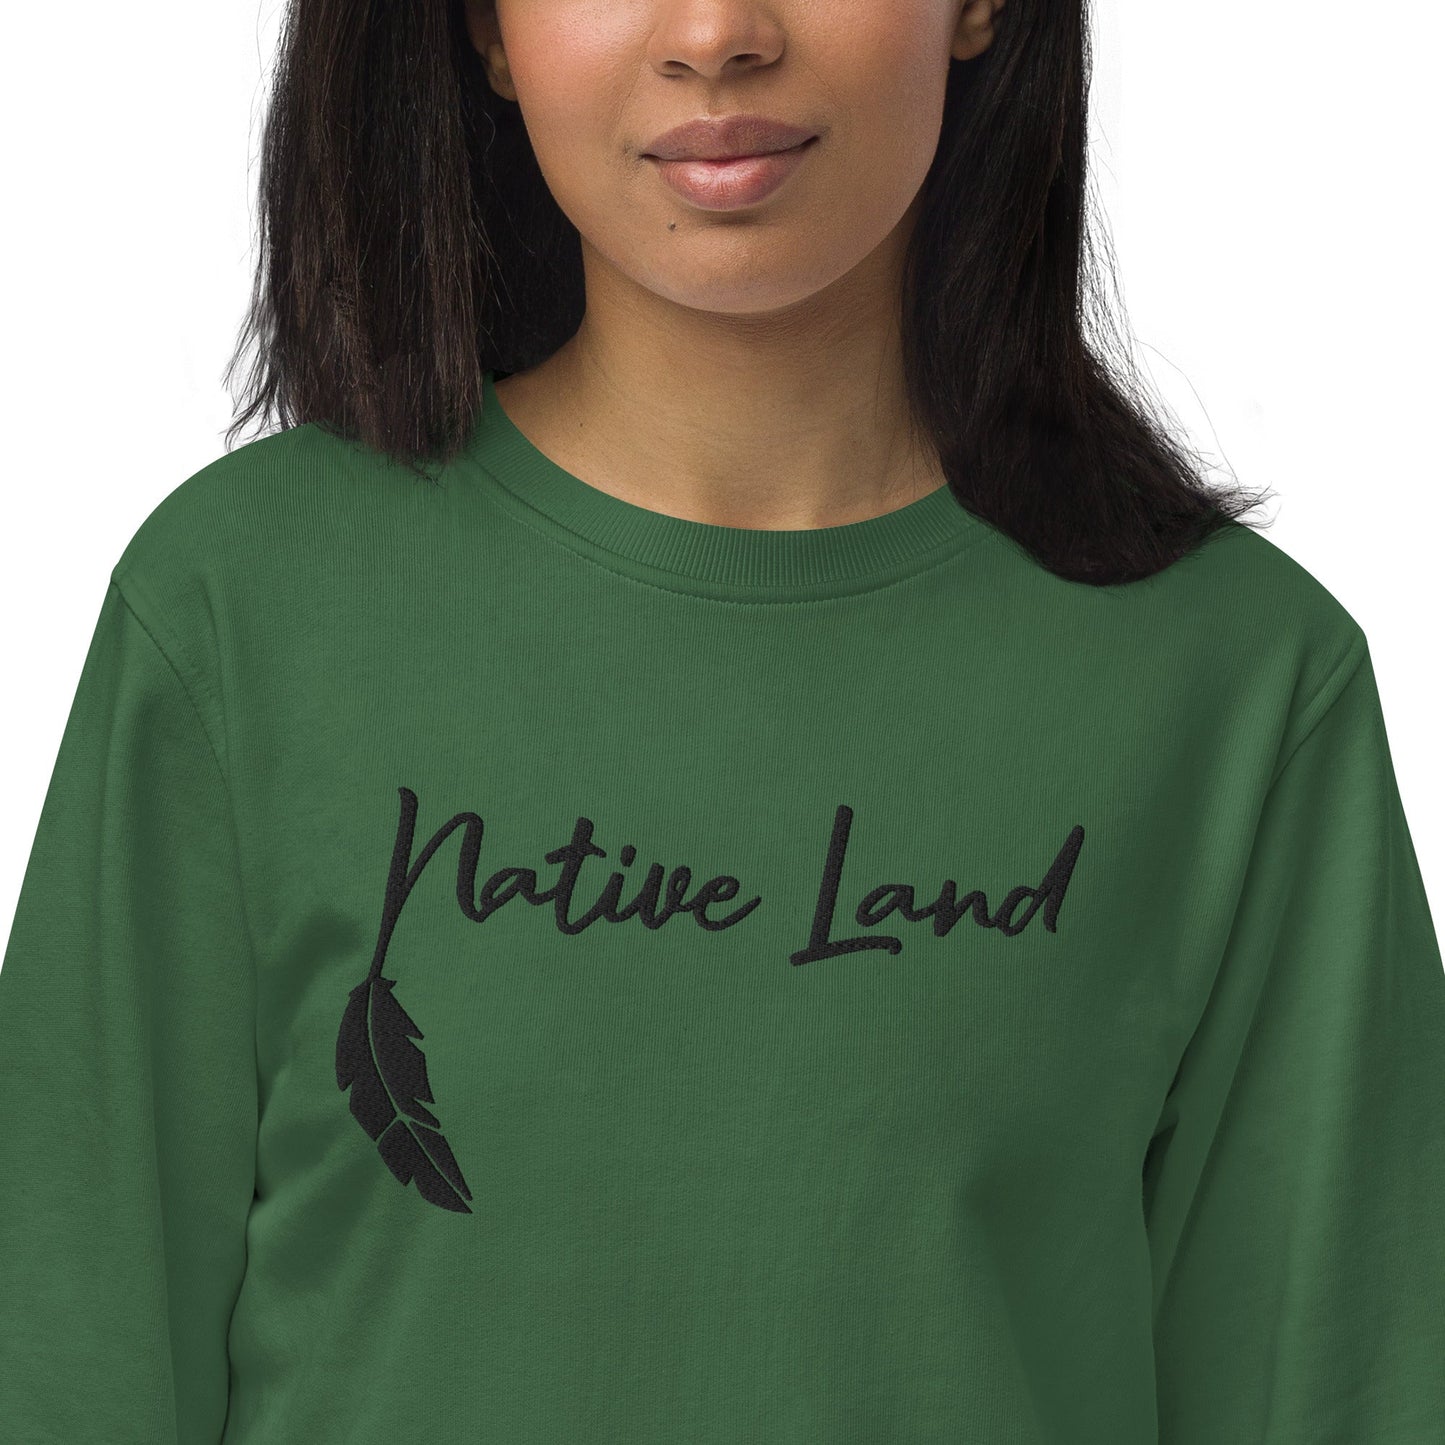 Embroidered Unisex organic sweatshirt Native Land - Nikikw Designs